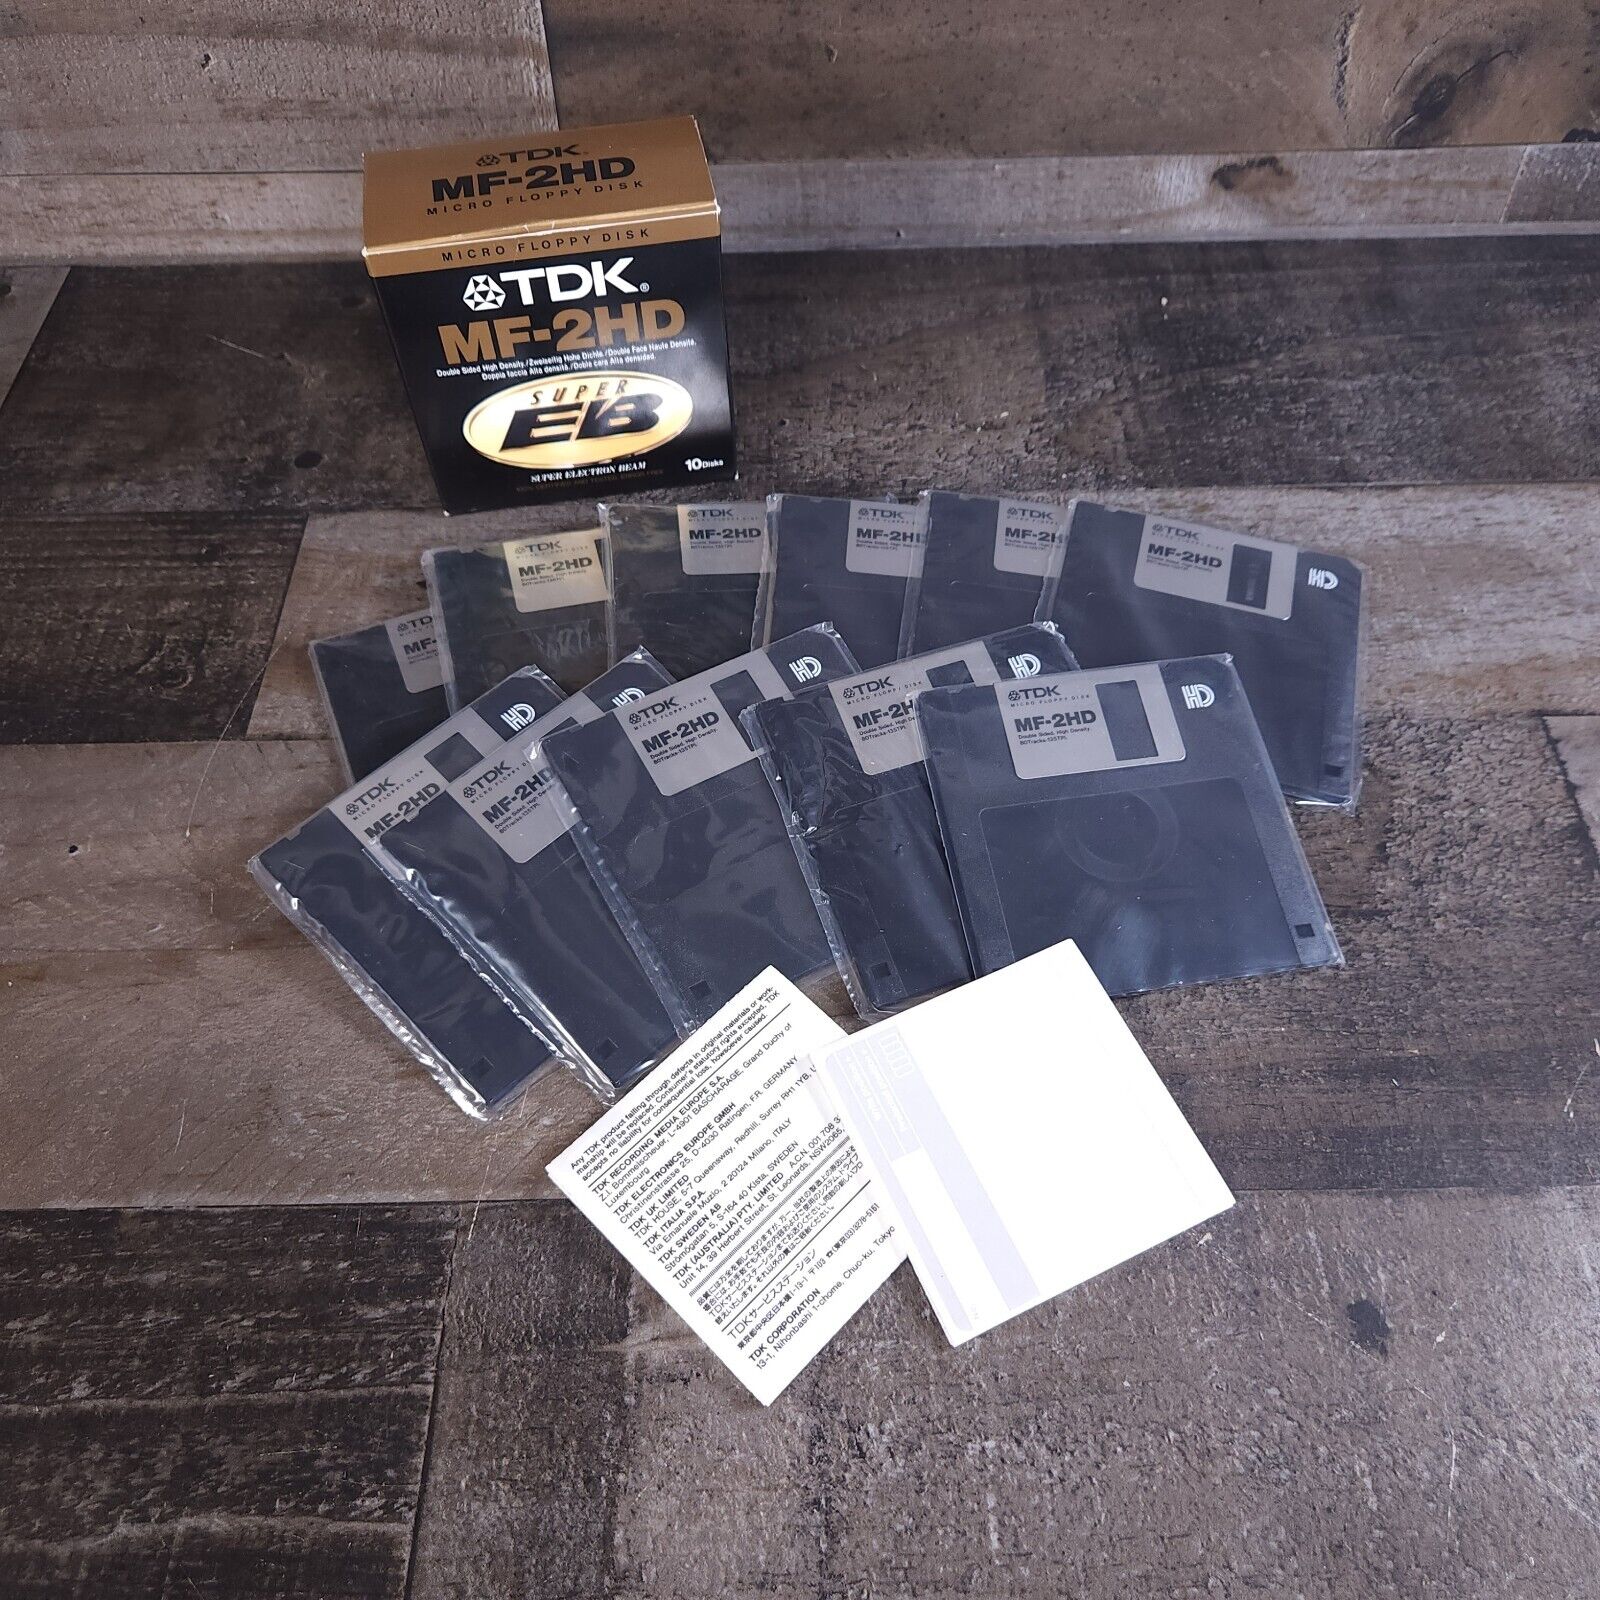 VTG TDK MF-2HD Micro Floppy Disk Super EB Lot of 11 Unused Diskettes + 20 Labels